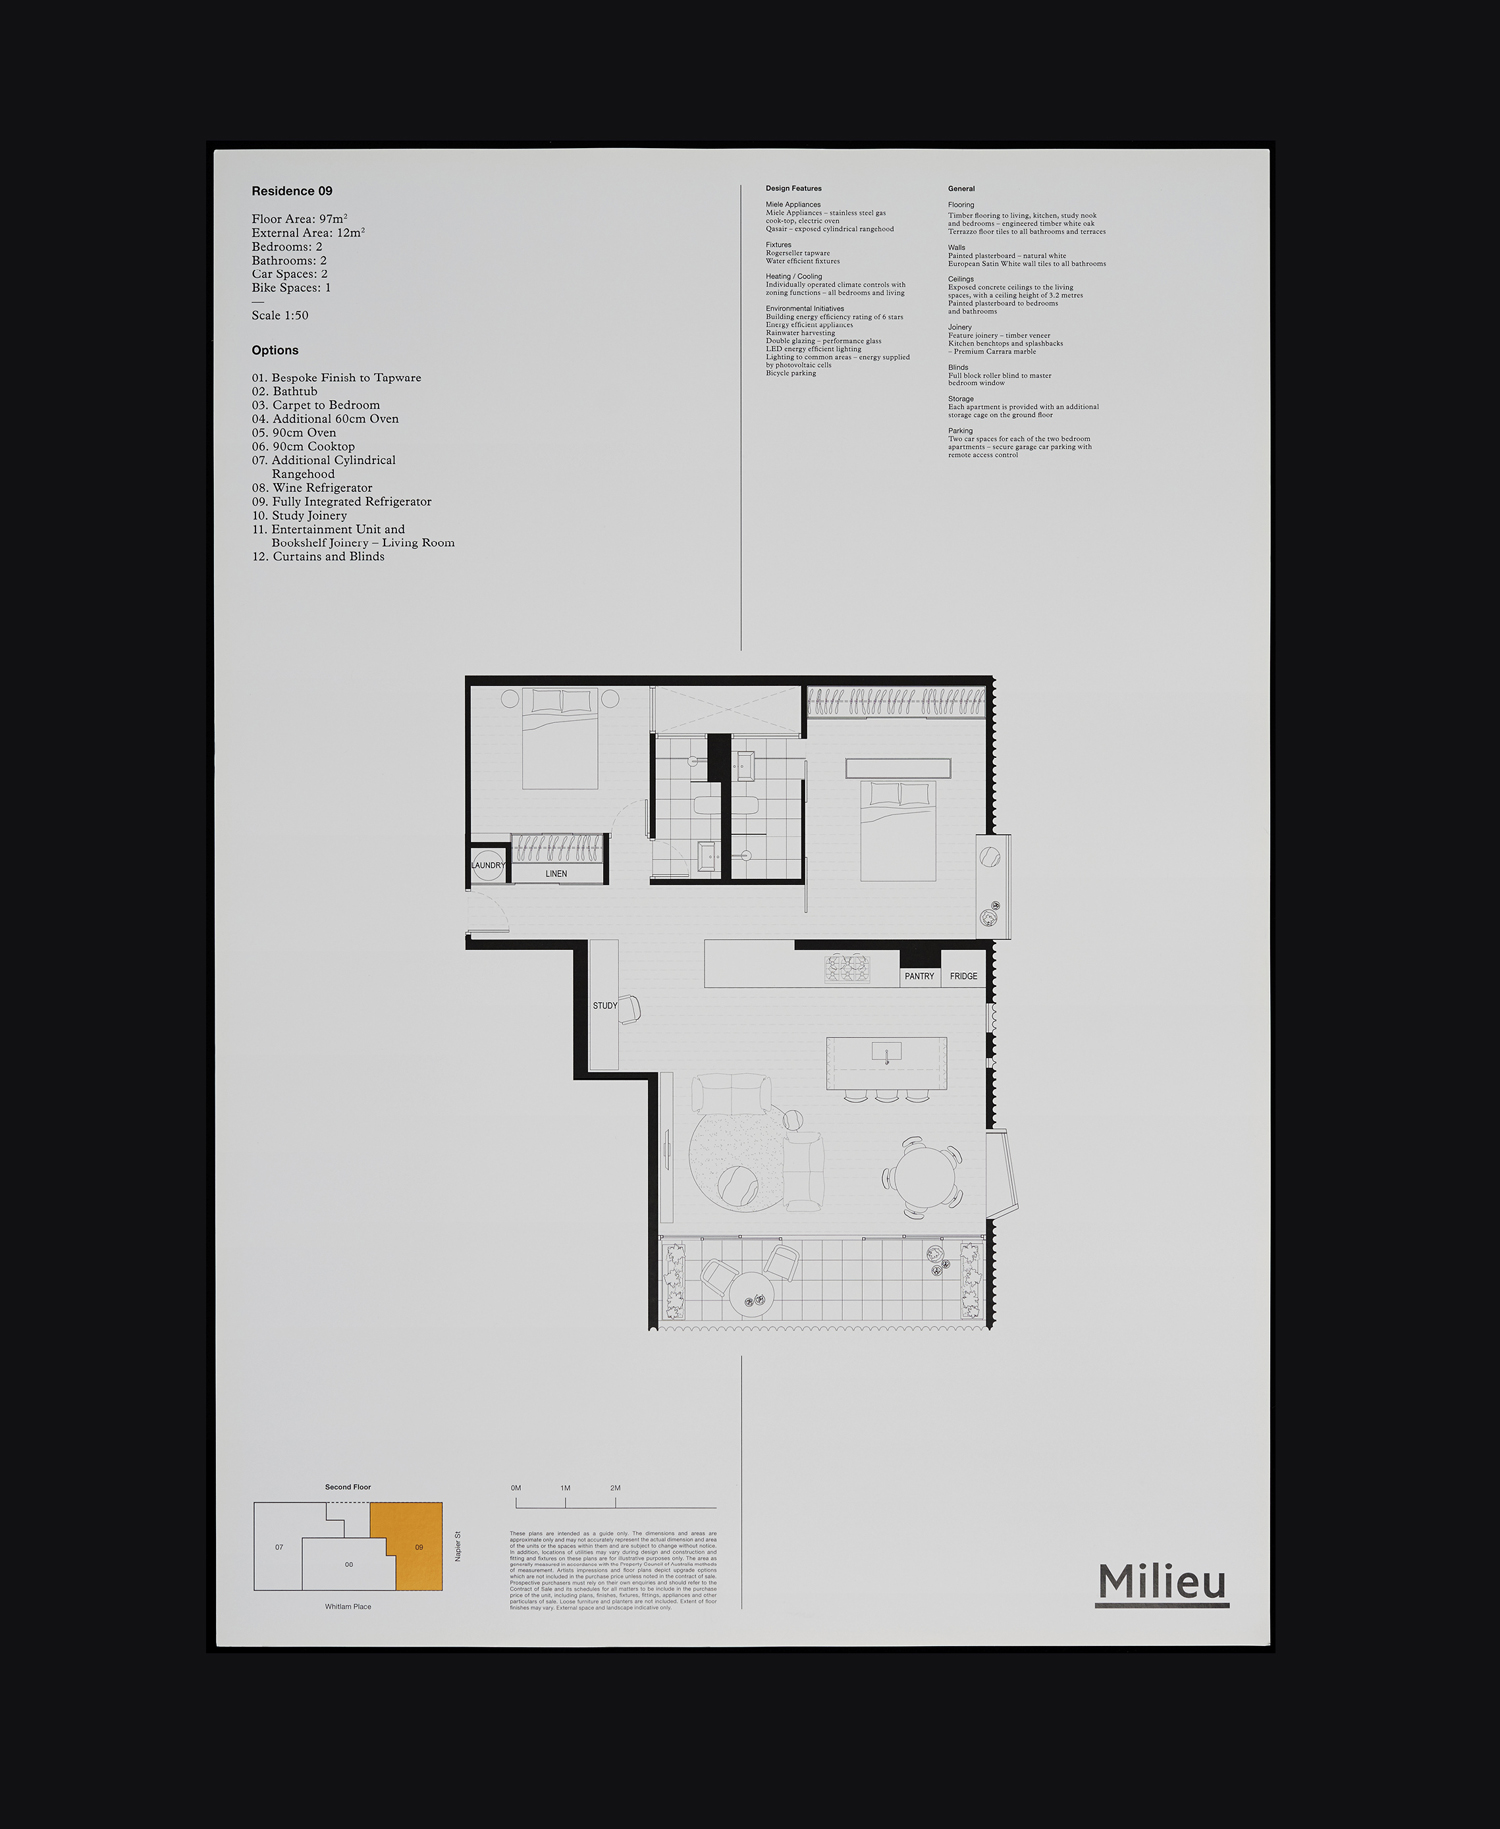 Floor plan designed by Studio Hi Ho for Fitzroy development Whitlam Place